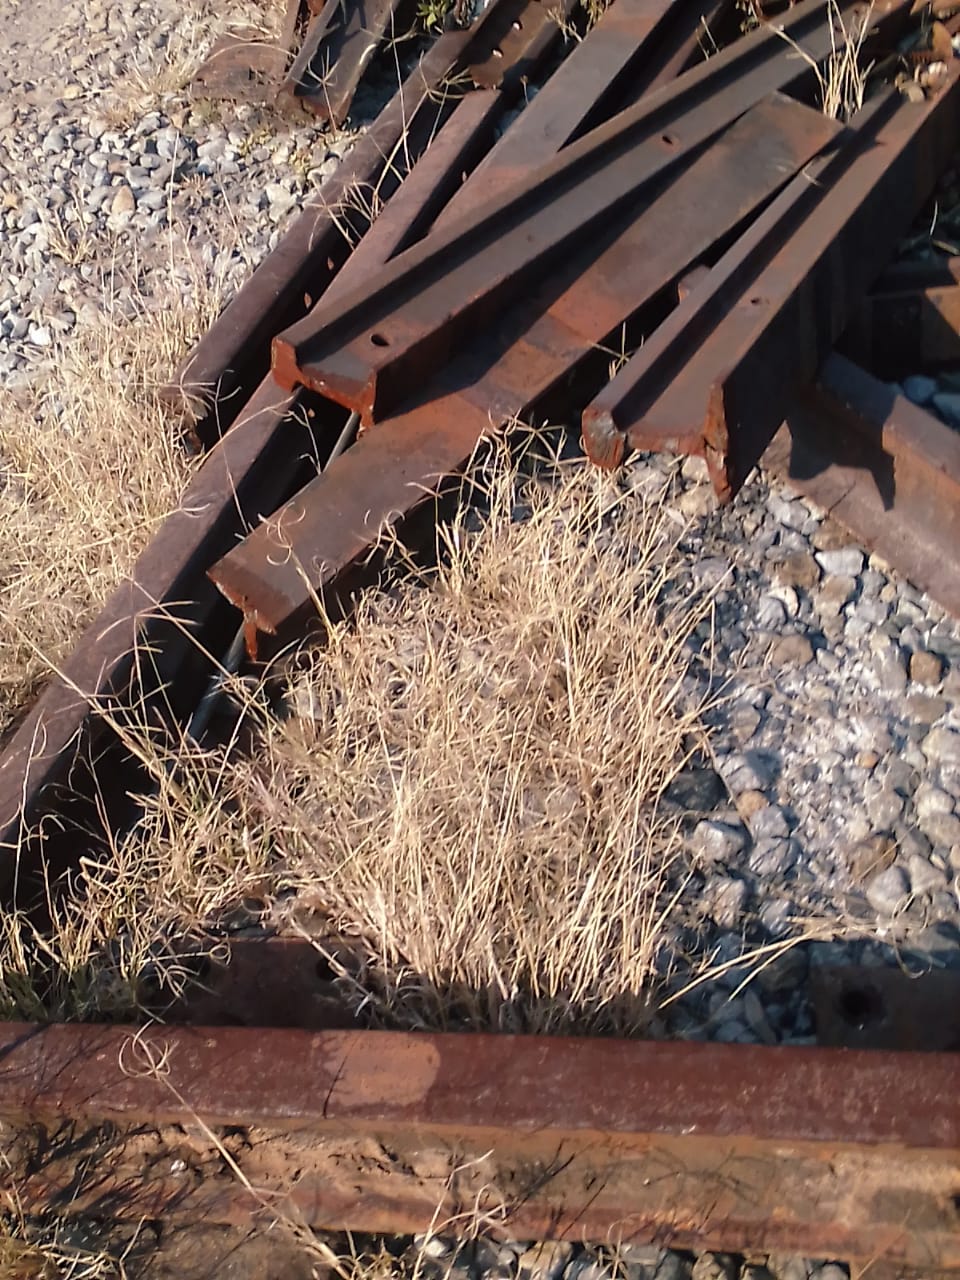 FCO - Used rail (South africa origin) - 0218